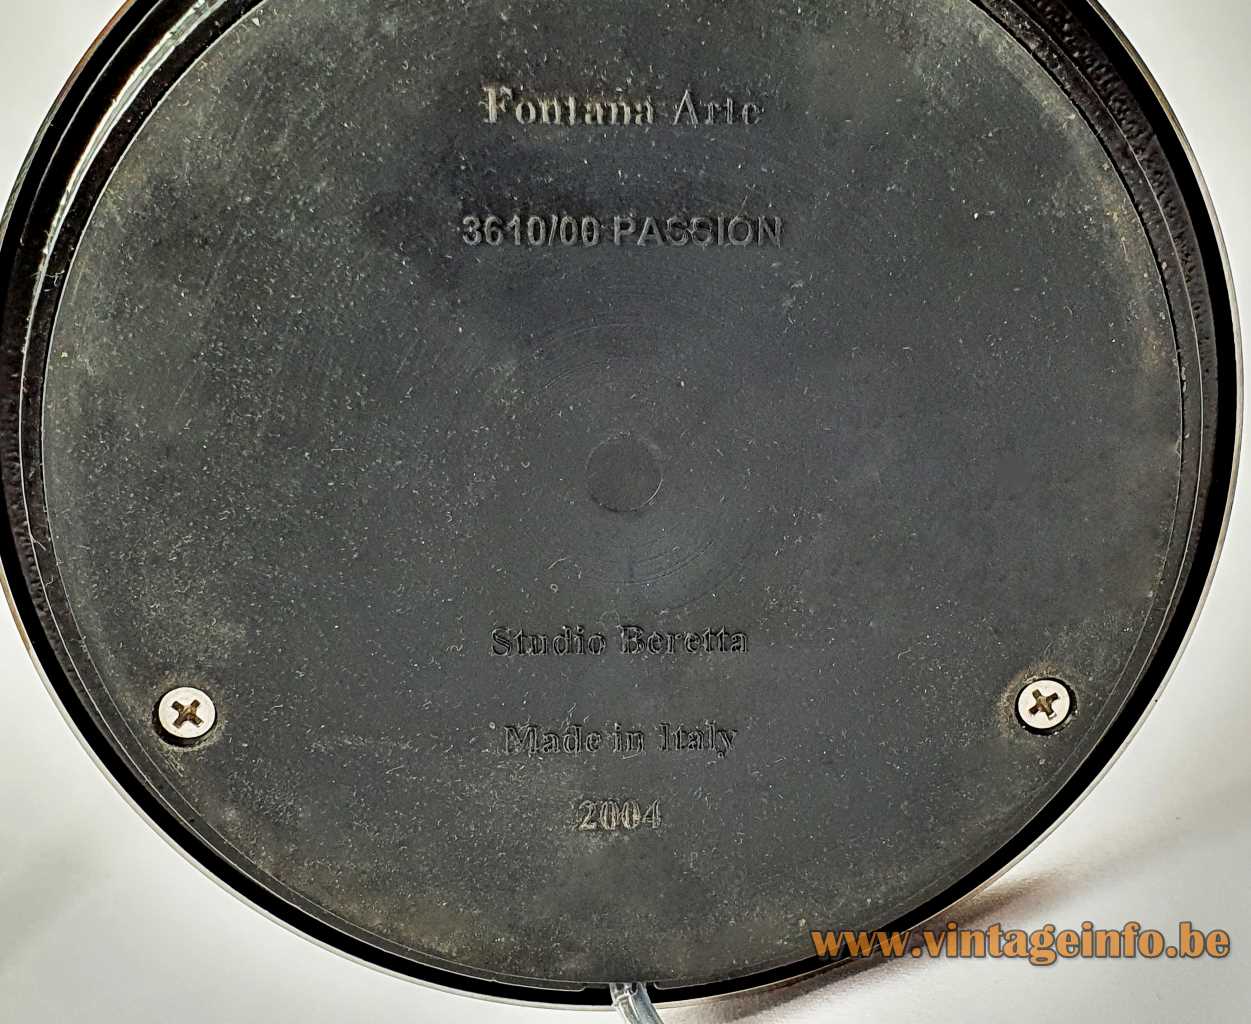 FontanaArte Passion table lamp 2004 design: Studio Beretta Associati plastic bottom label logo